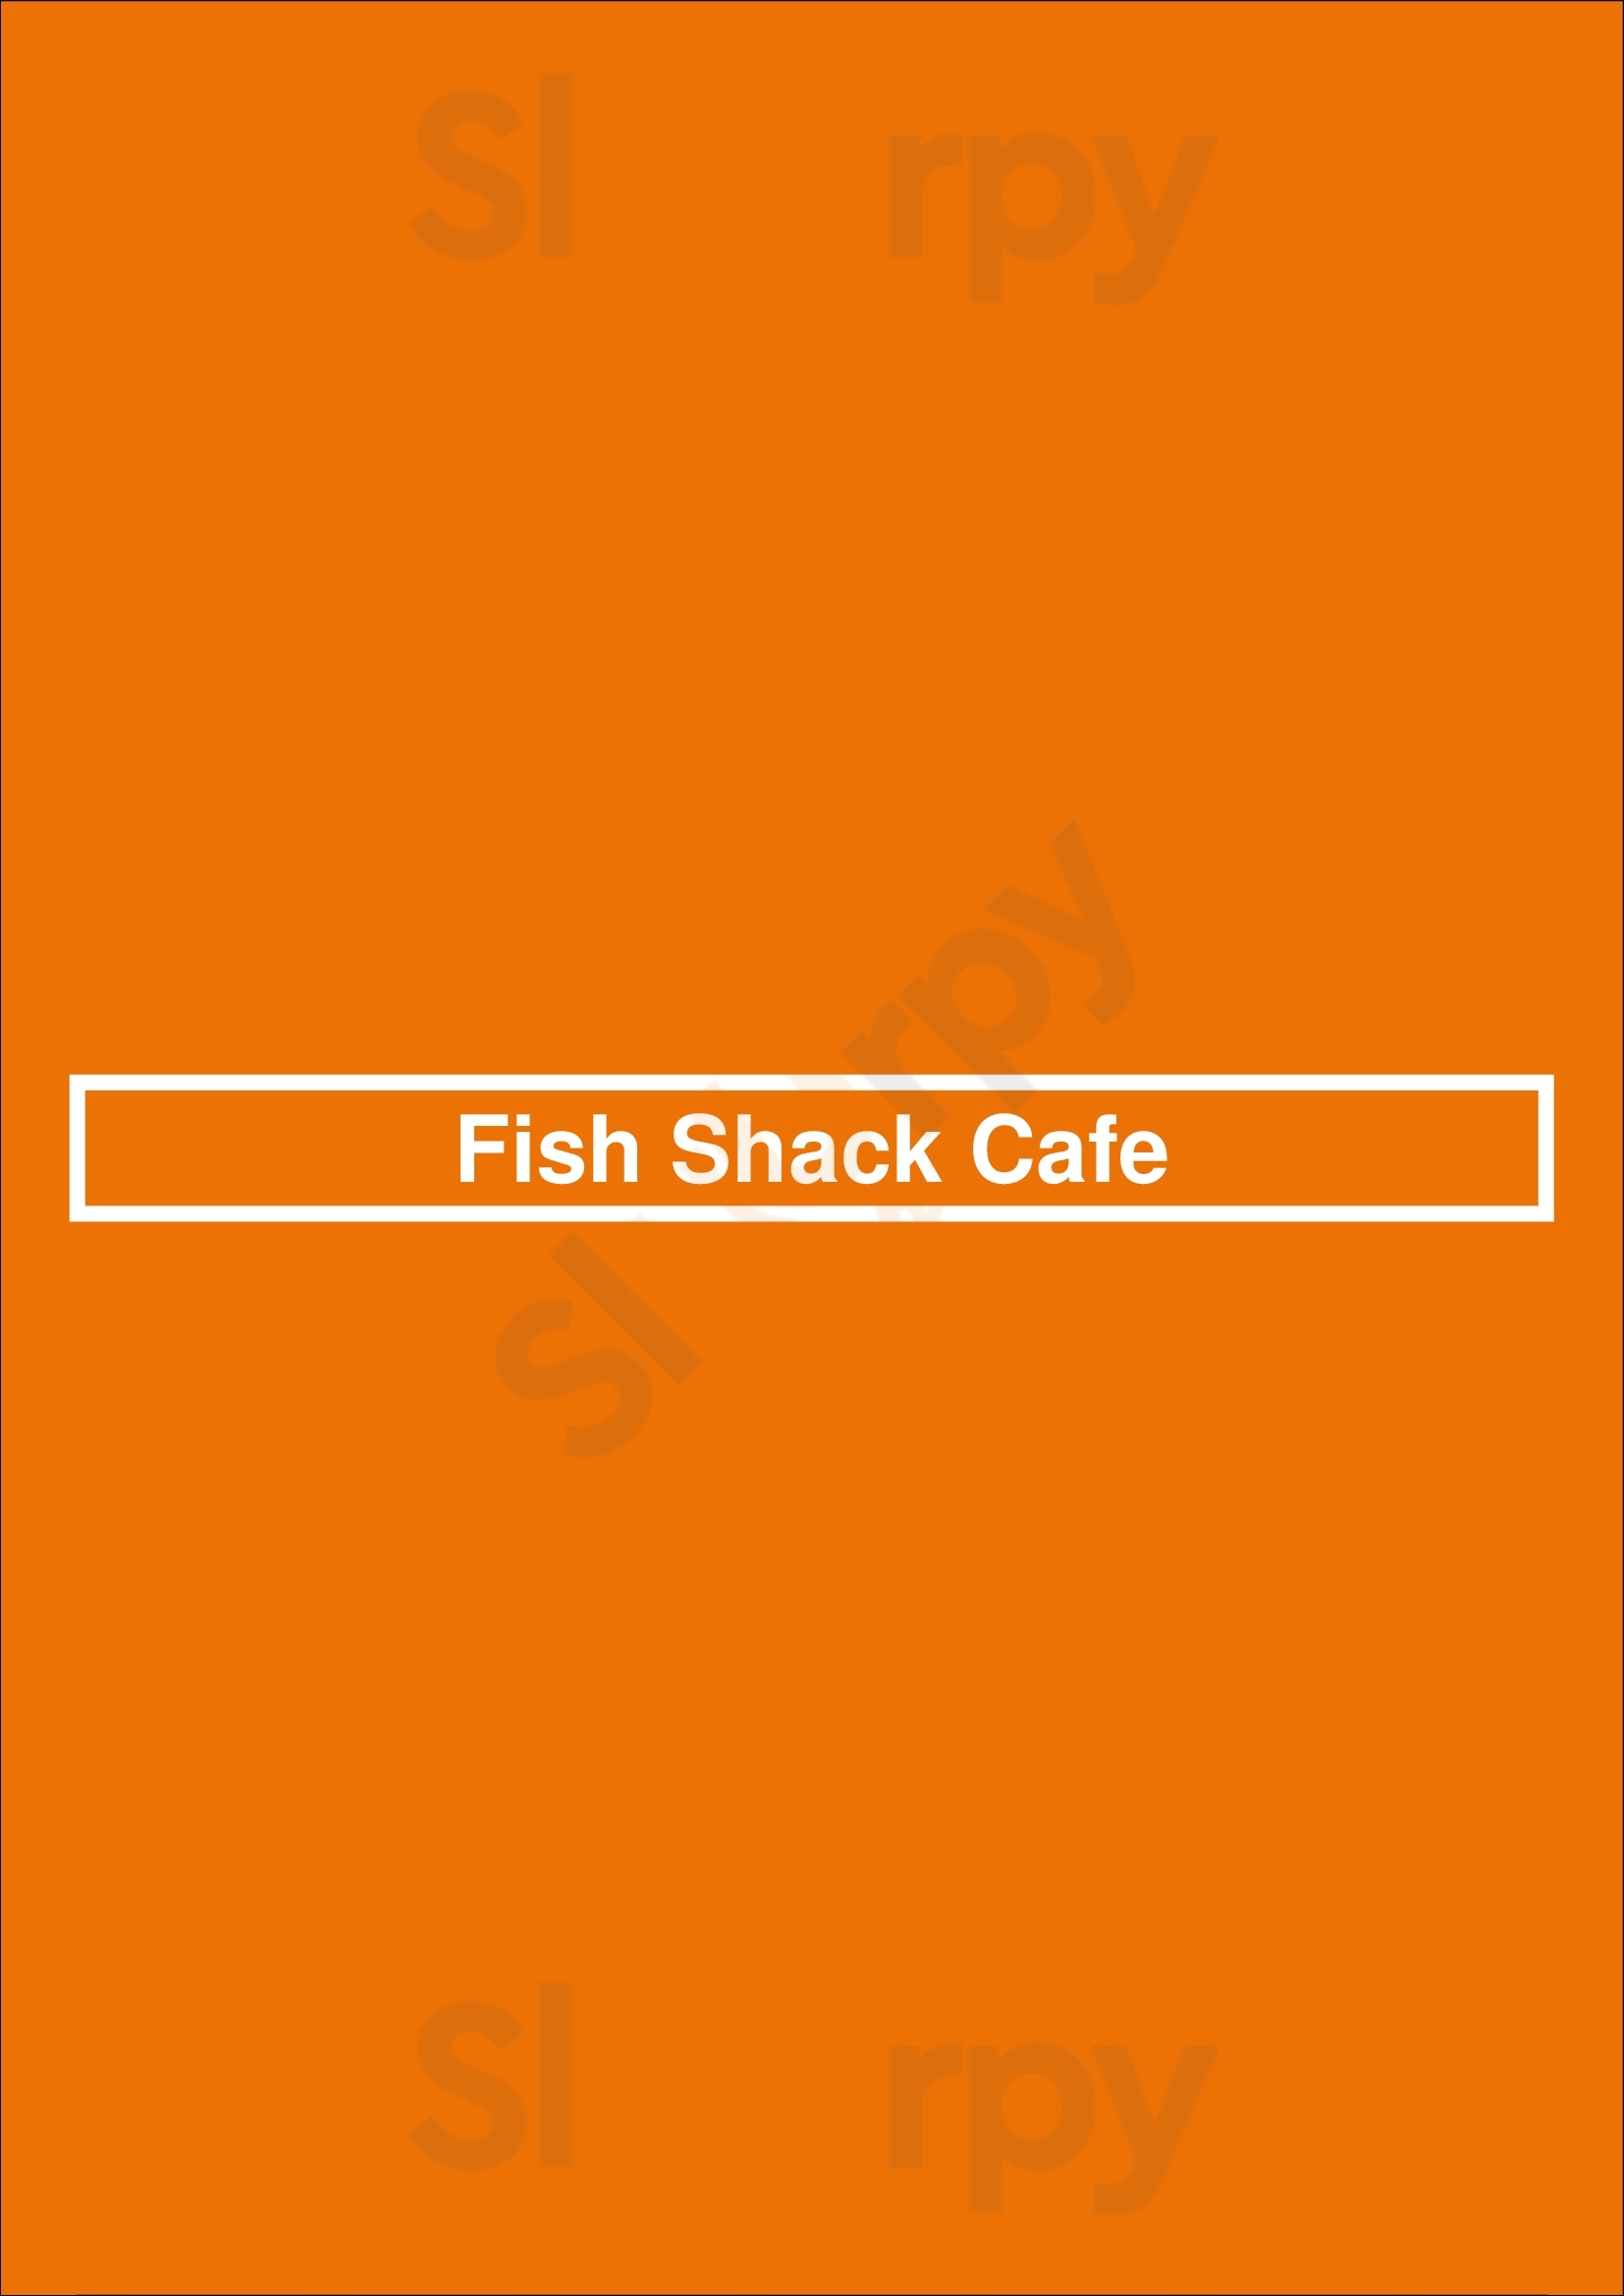 Fish Shack Cafe Dublin Menu - 1